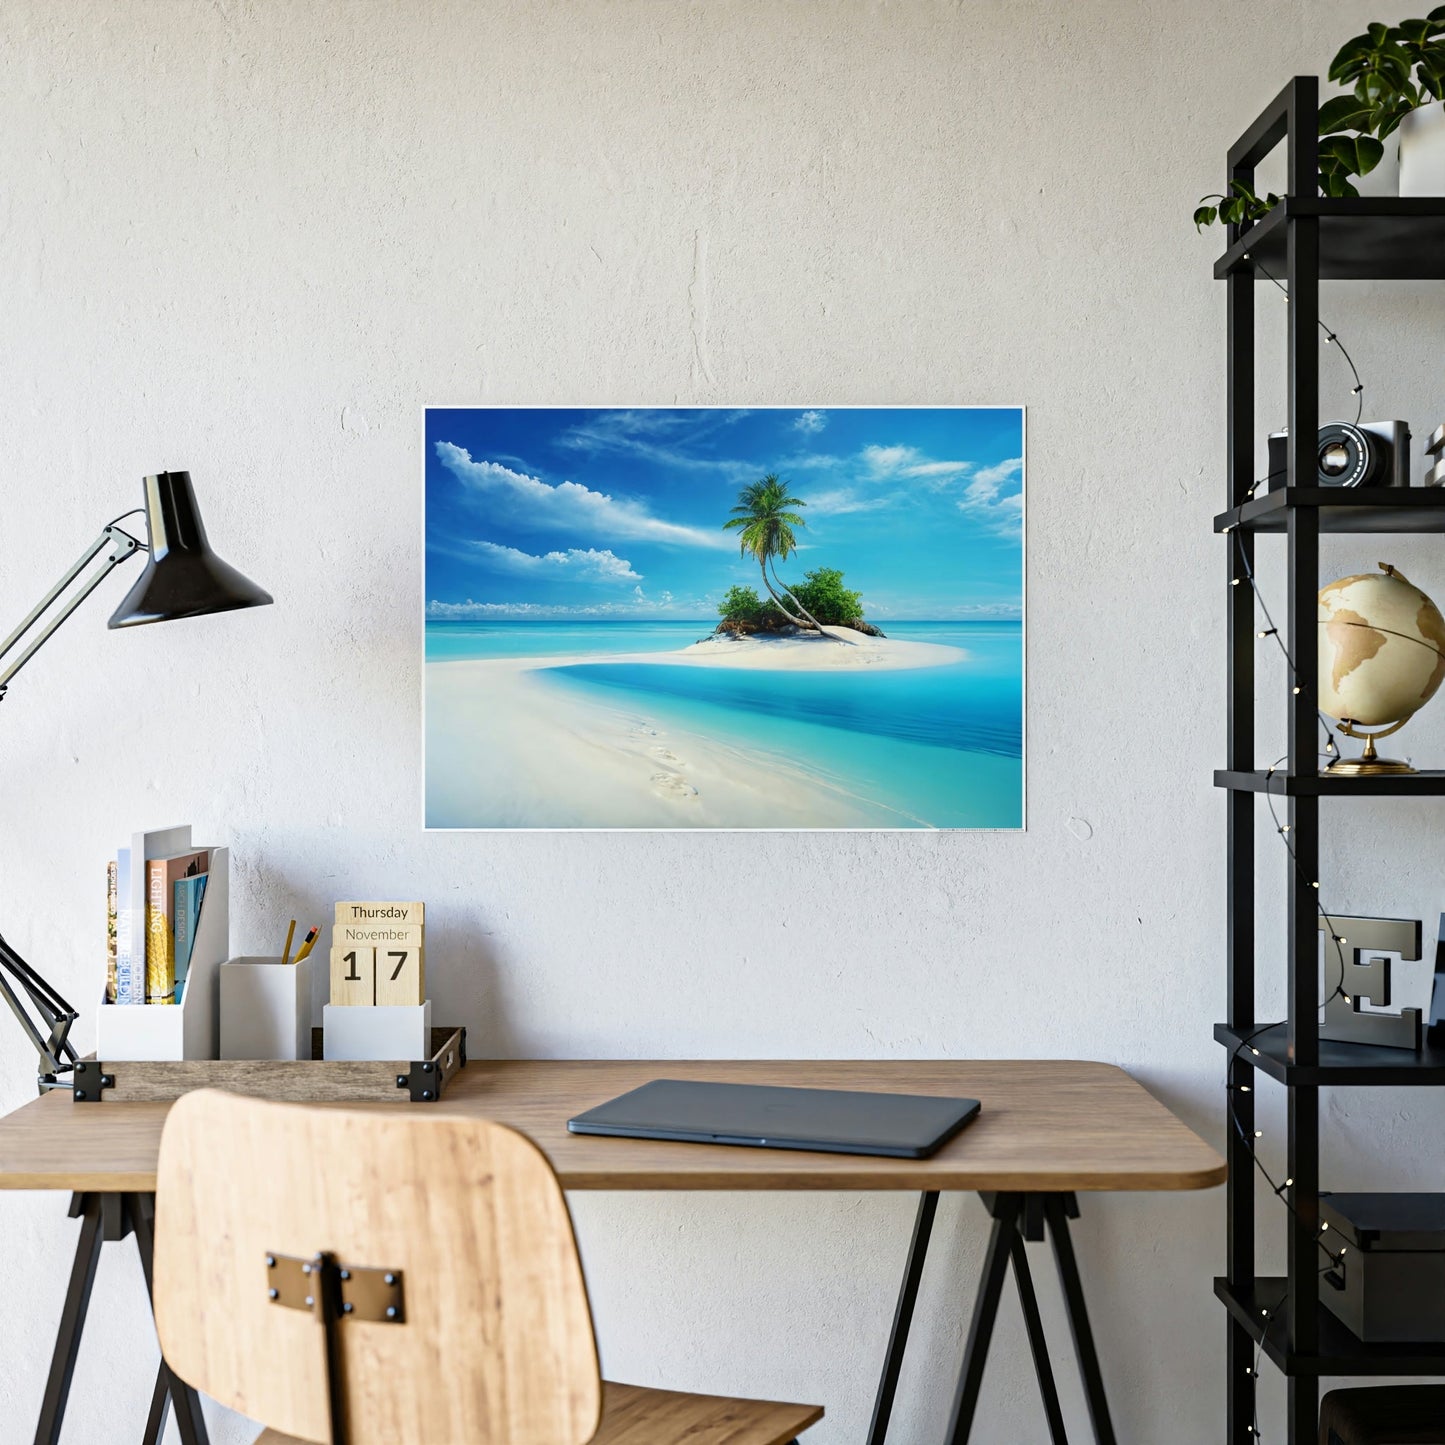 Tranquil Tropics: Canvas & Poster Art of a Serene Island Beach Scene